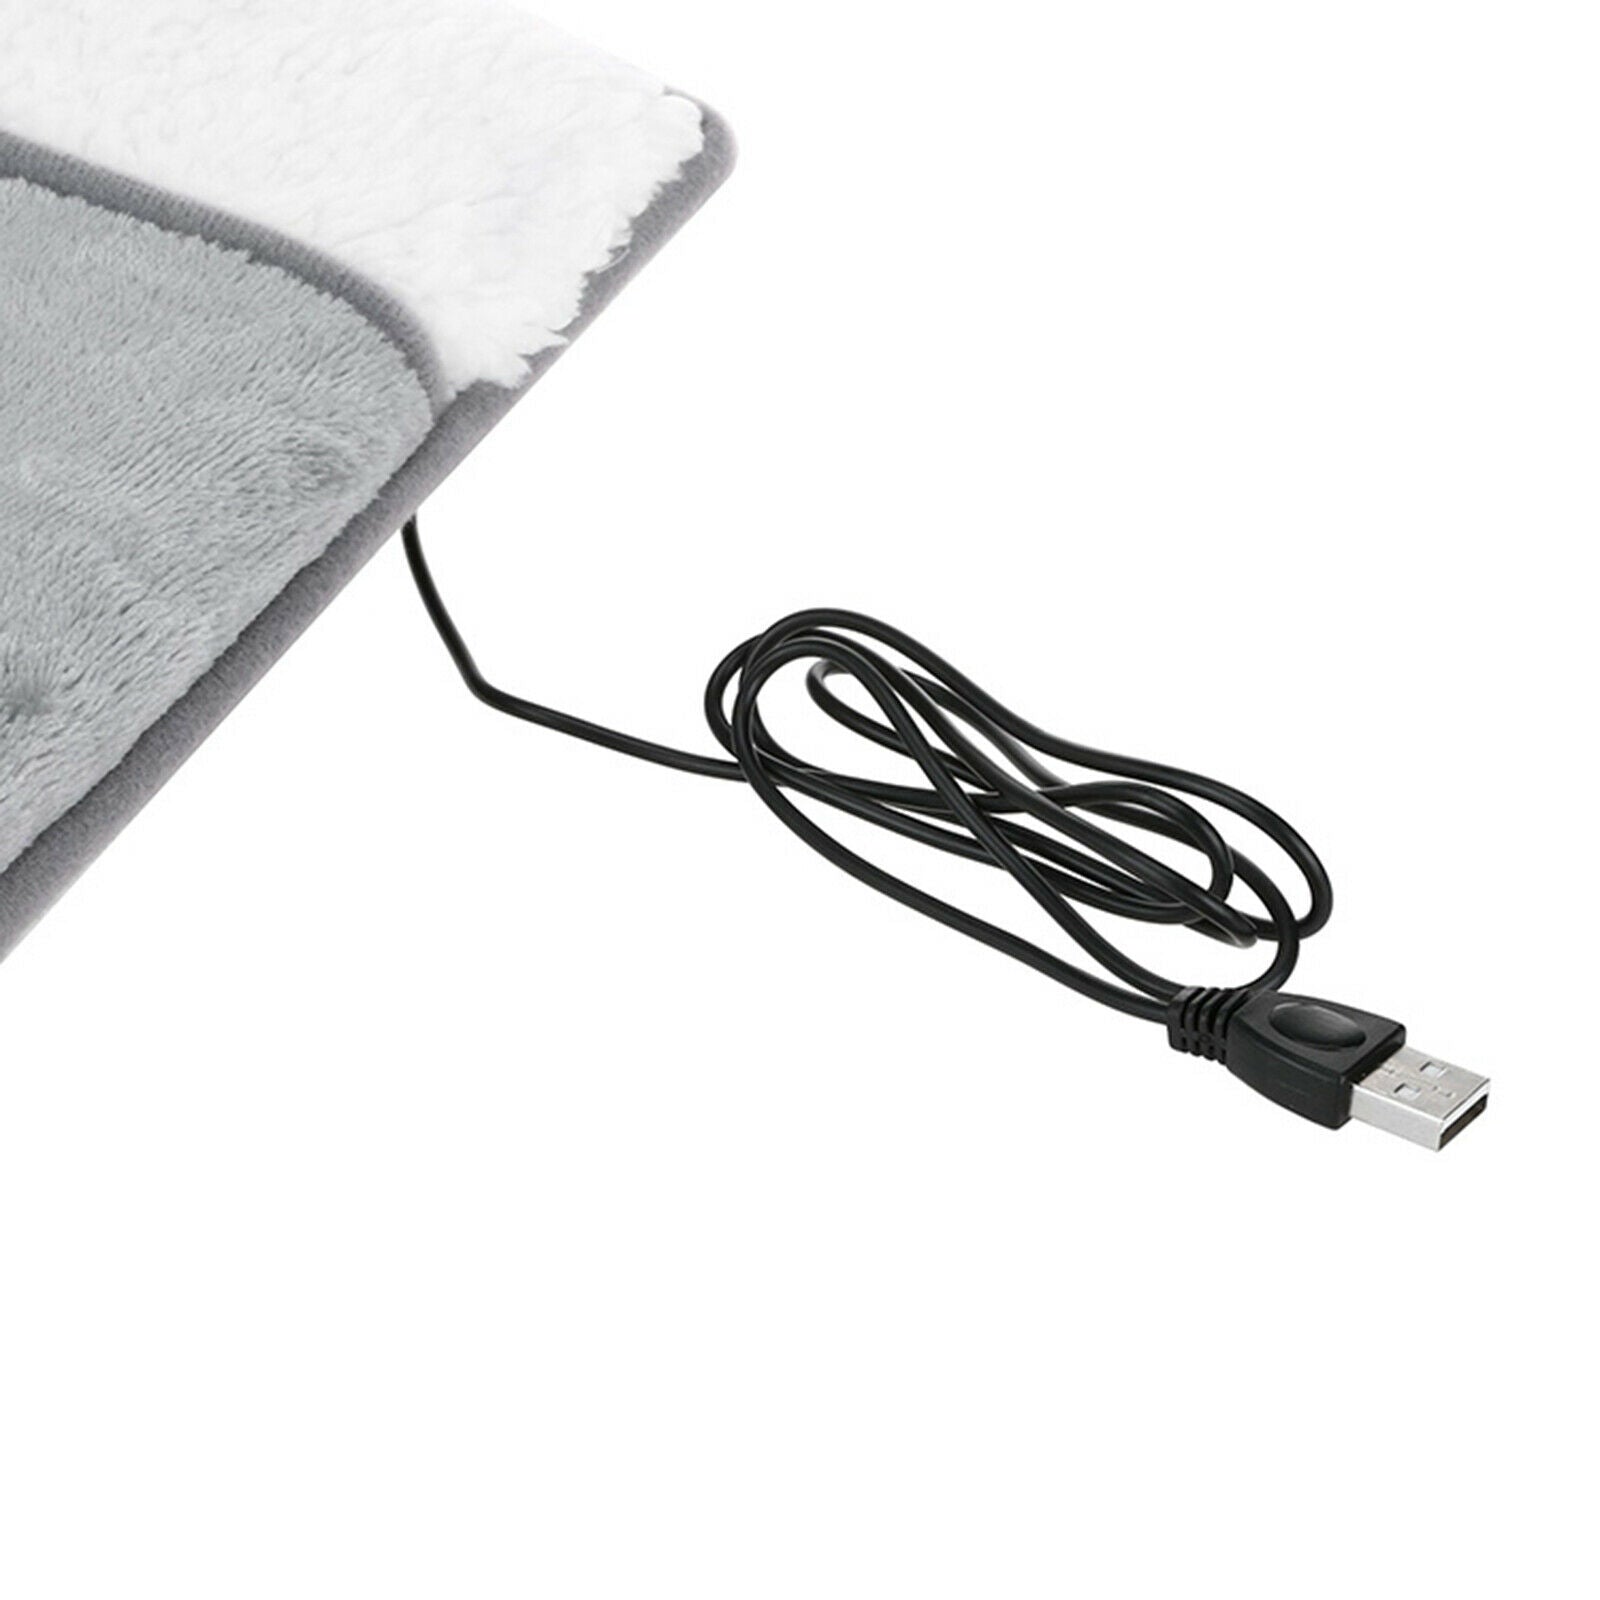 USB Heated Foot Warmers Electric Leg Warmers Winter Warming Floor Blanket Pad